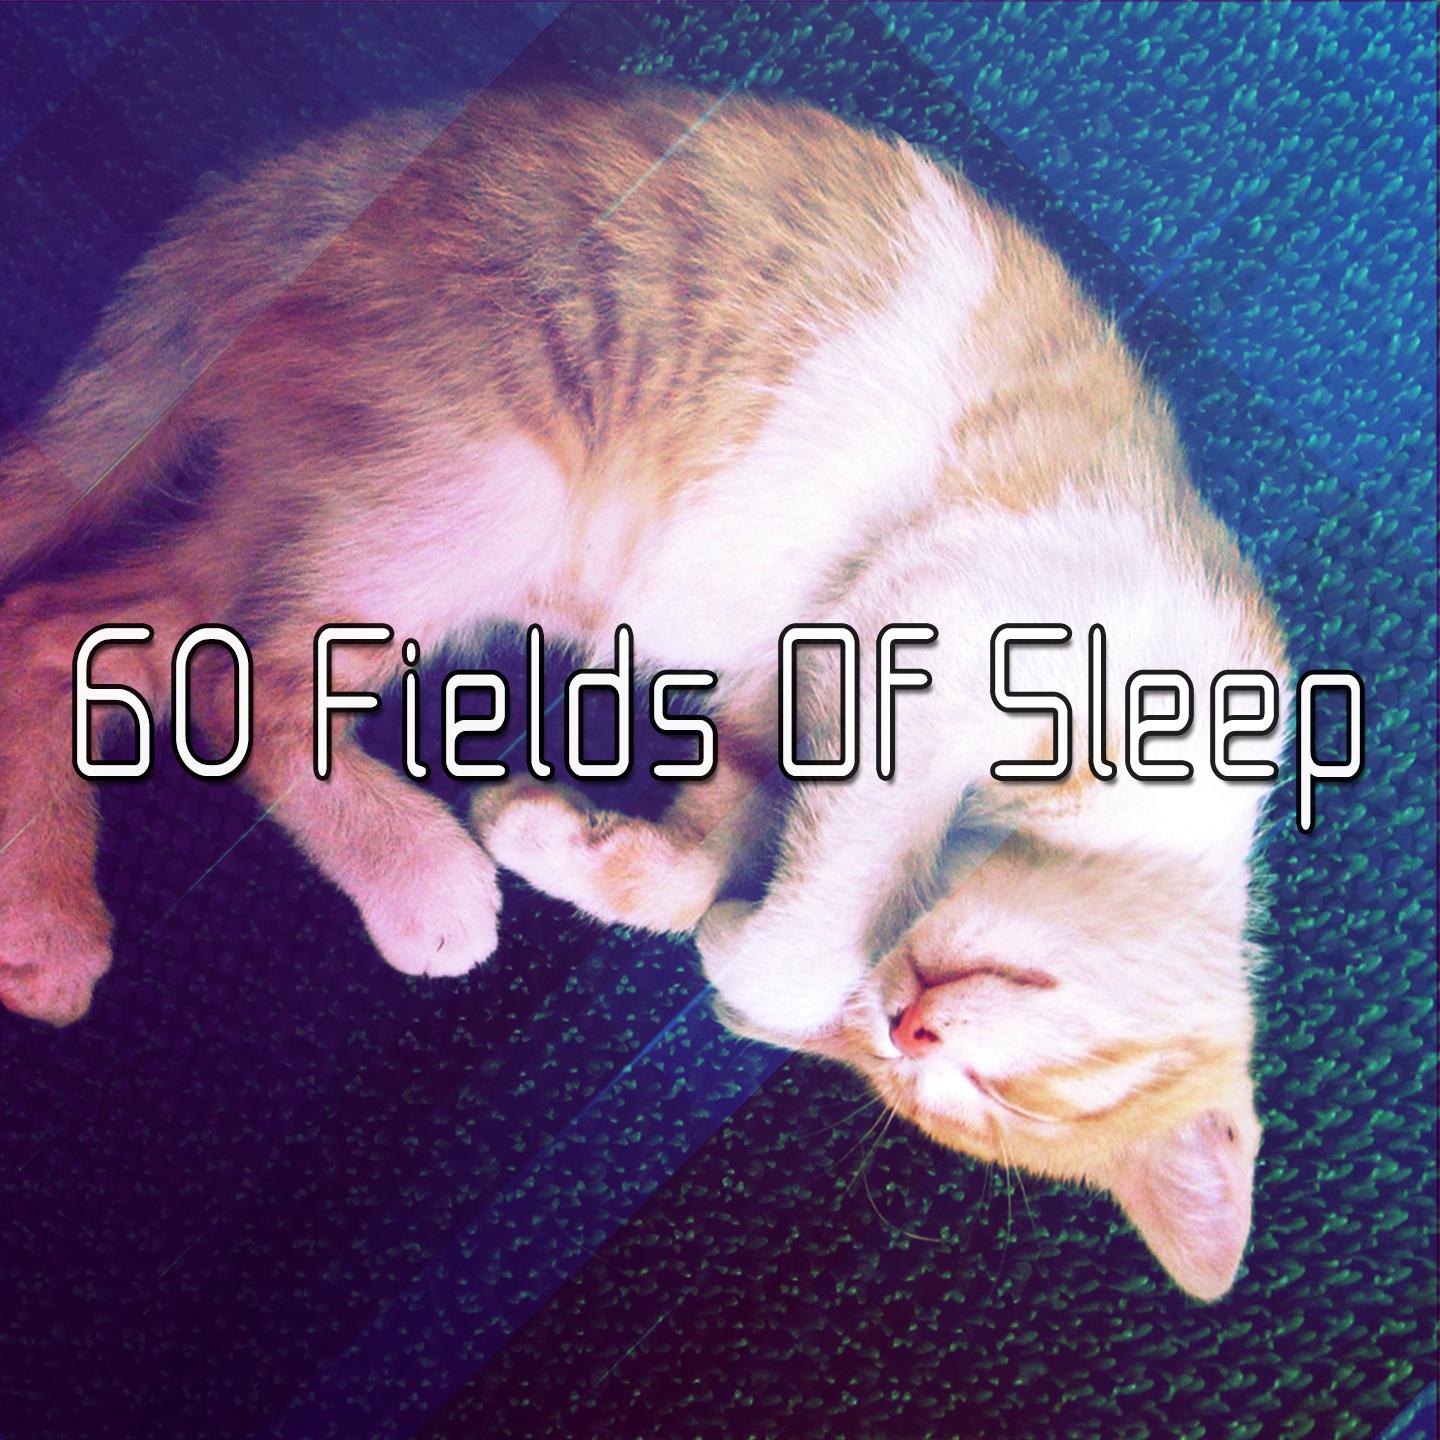 60 Fields Of Sleep